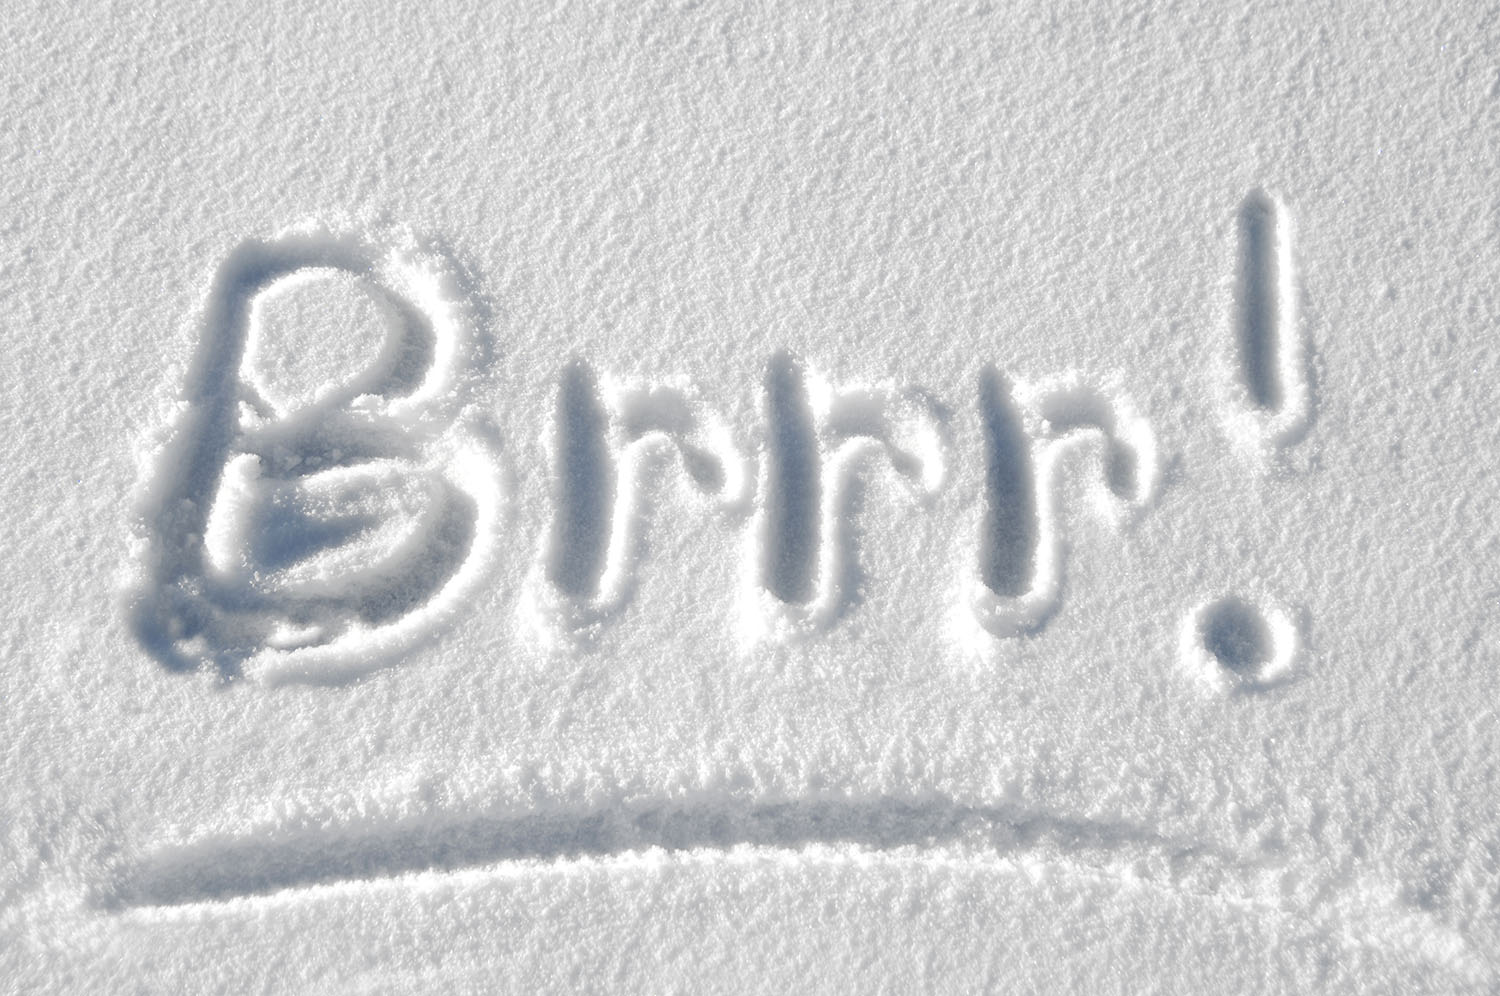 Handwritten message in the snow says "Brrr."